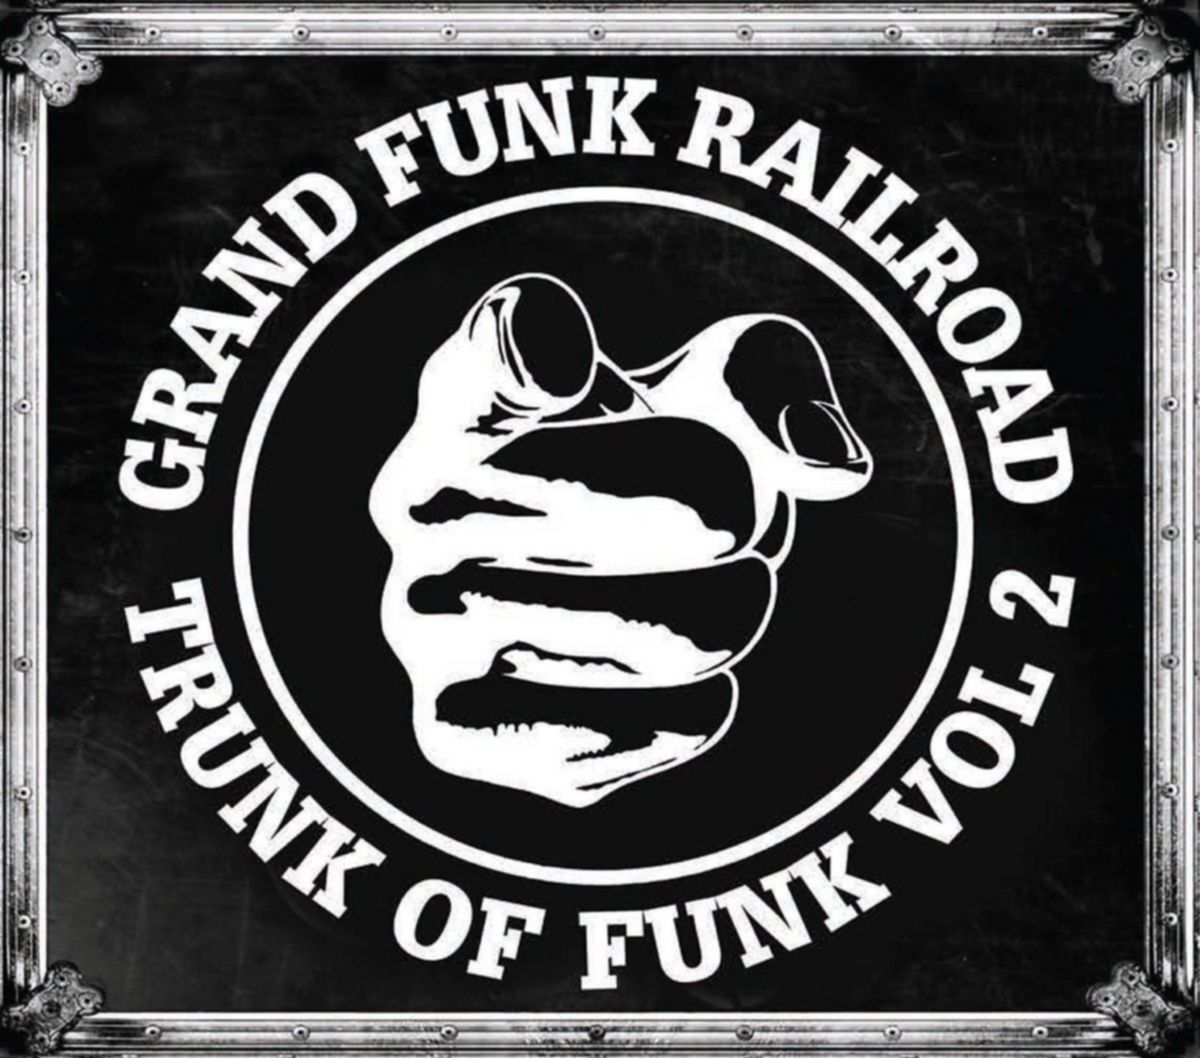 grand funk railroad